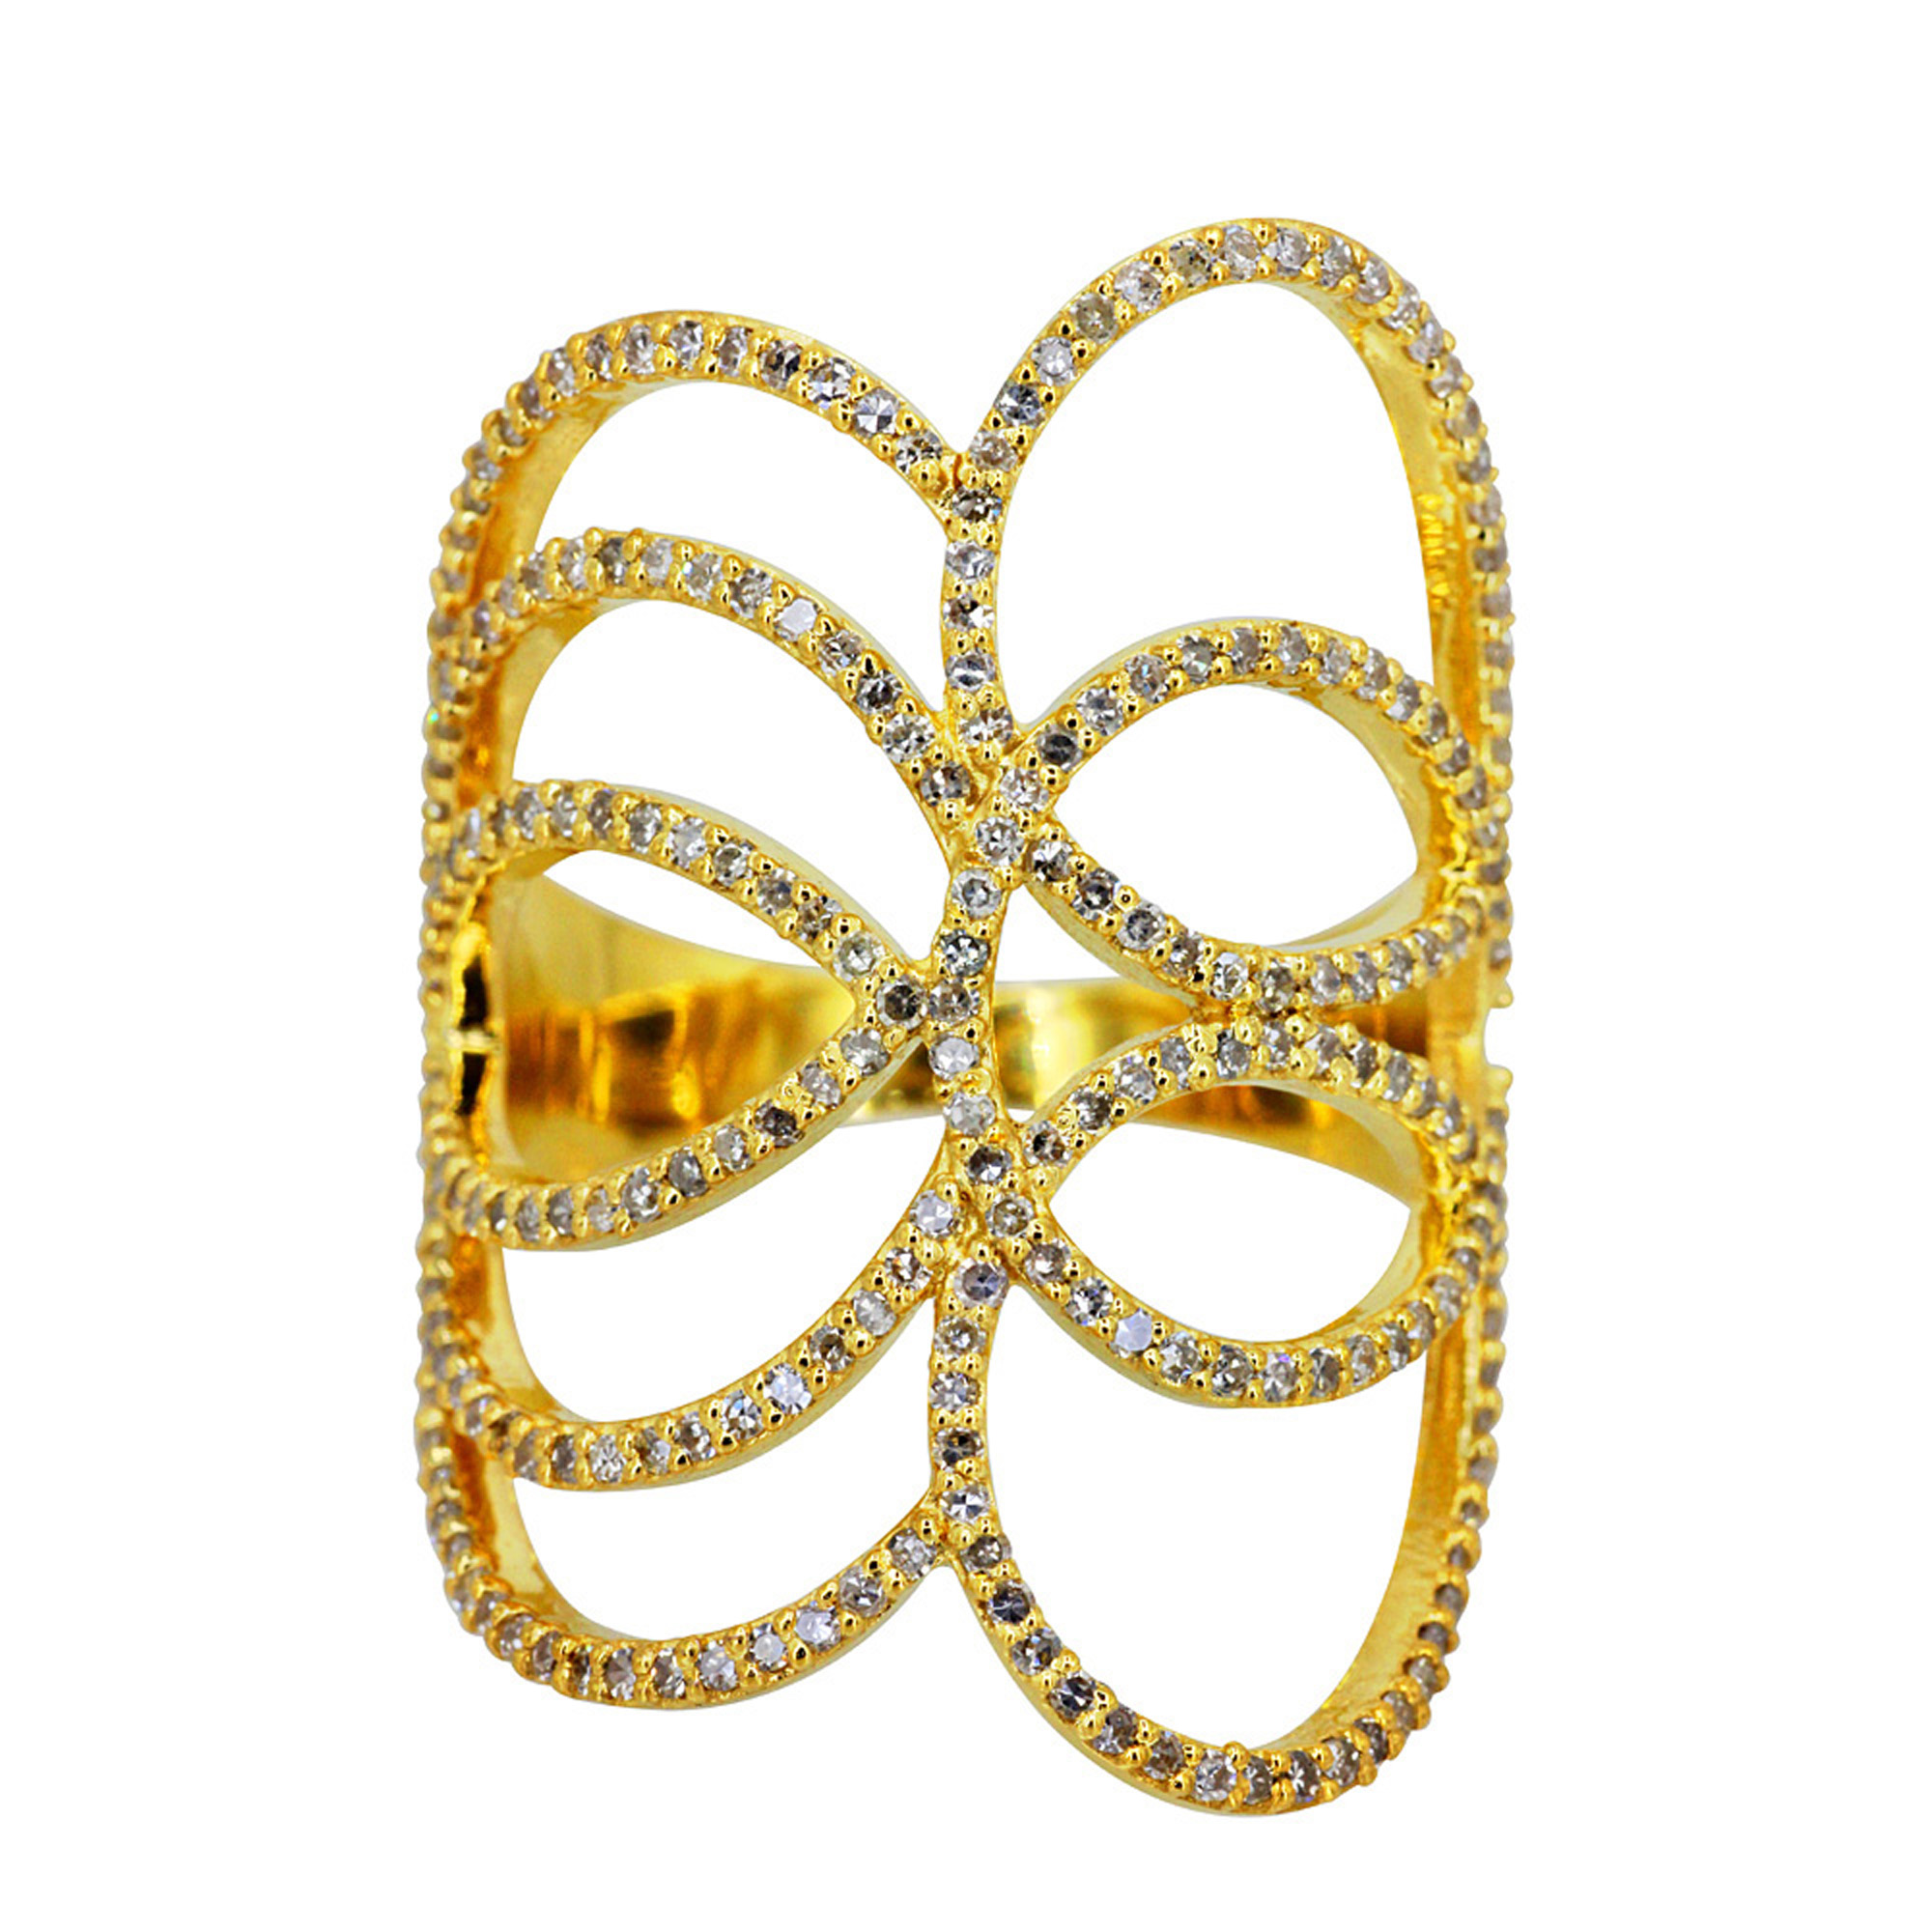 Genuine pave diamond 18k solid gold new designer ring